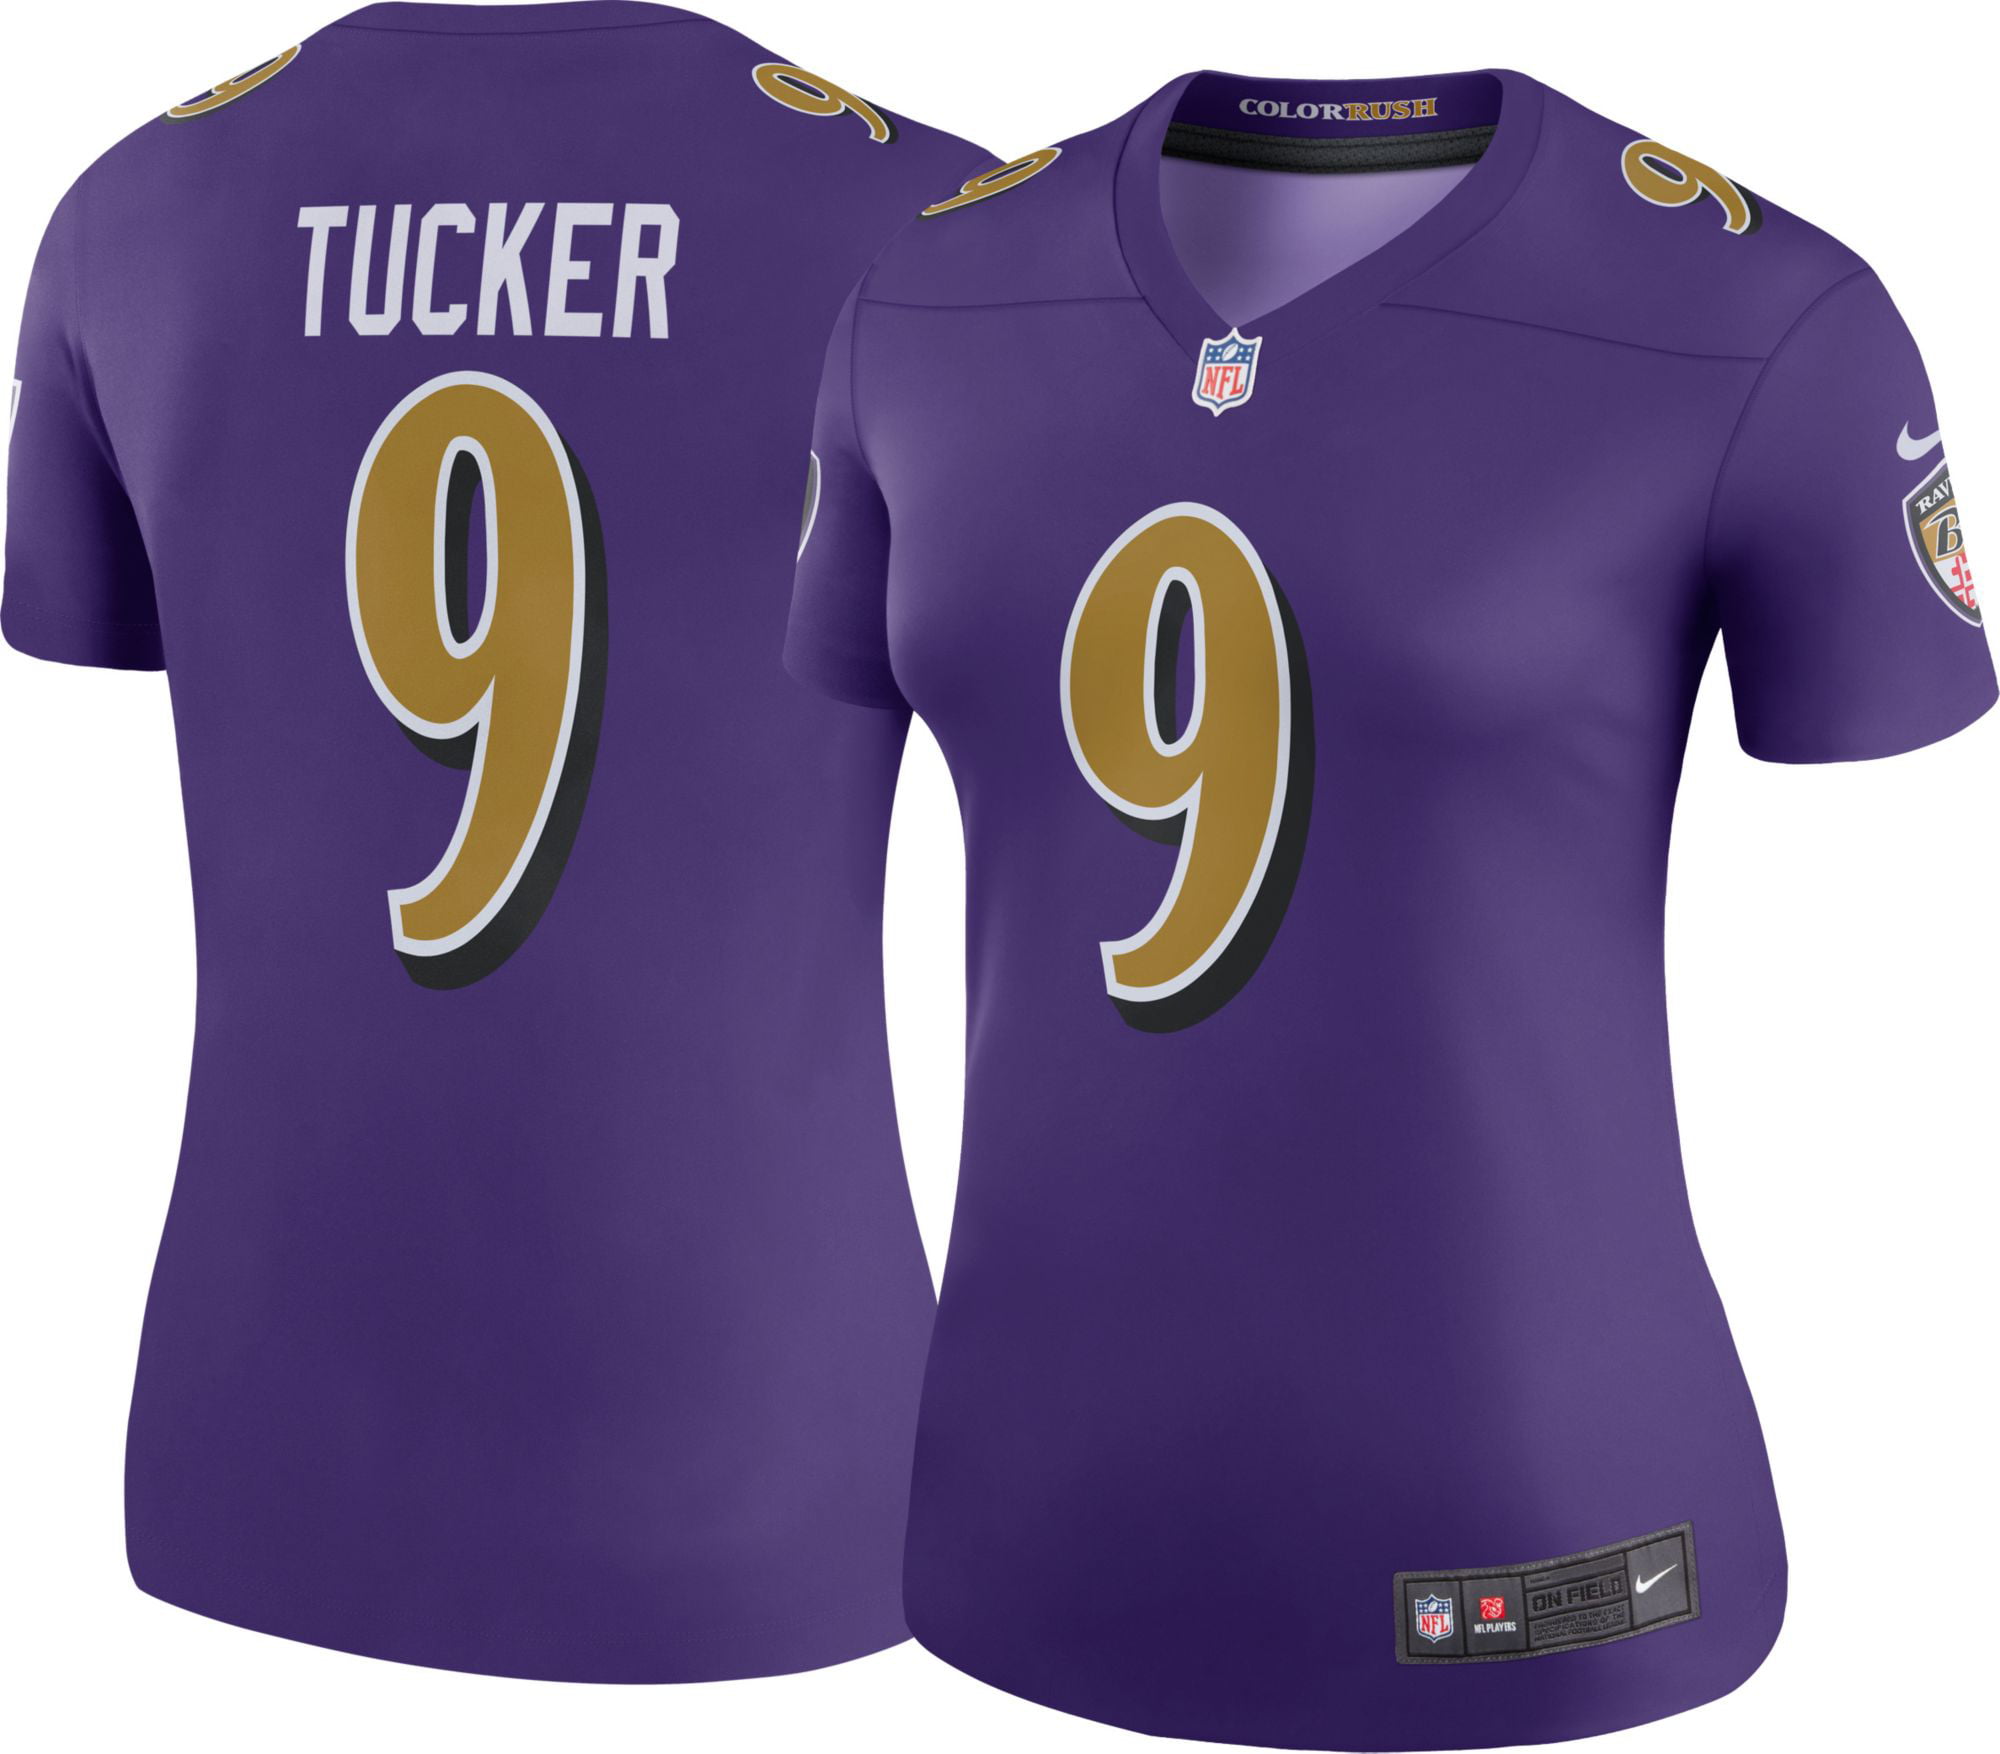 Nike Women's Color Rush Legend Jersey Baltimore Ravens Justin Tucker #9 - Walmart.com